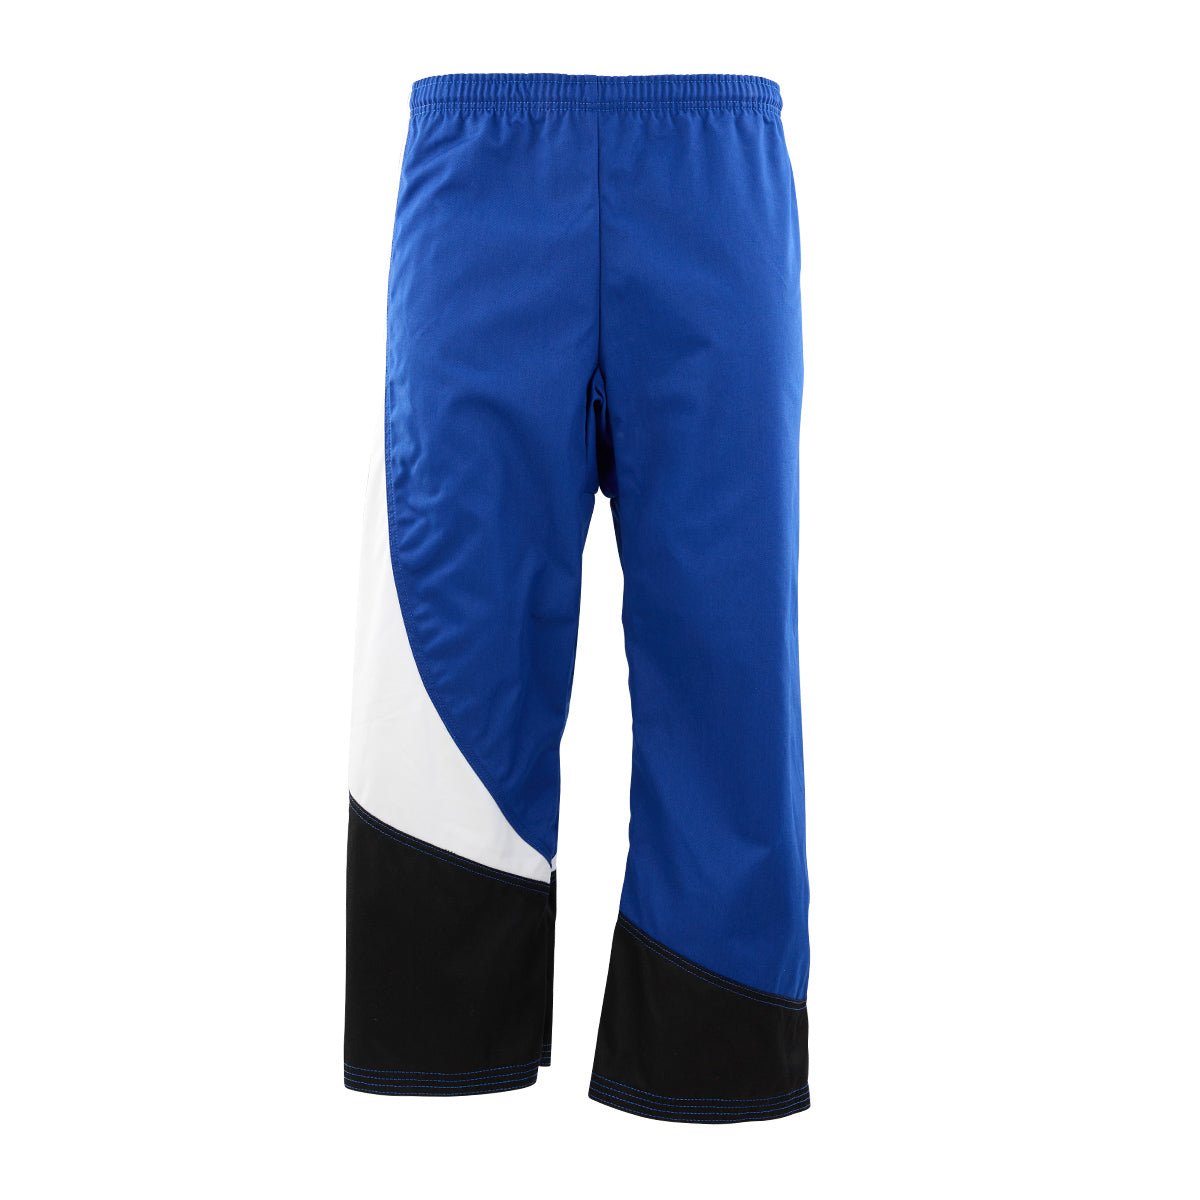 Tri-Color Diagonal Program Uniform Pants